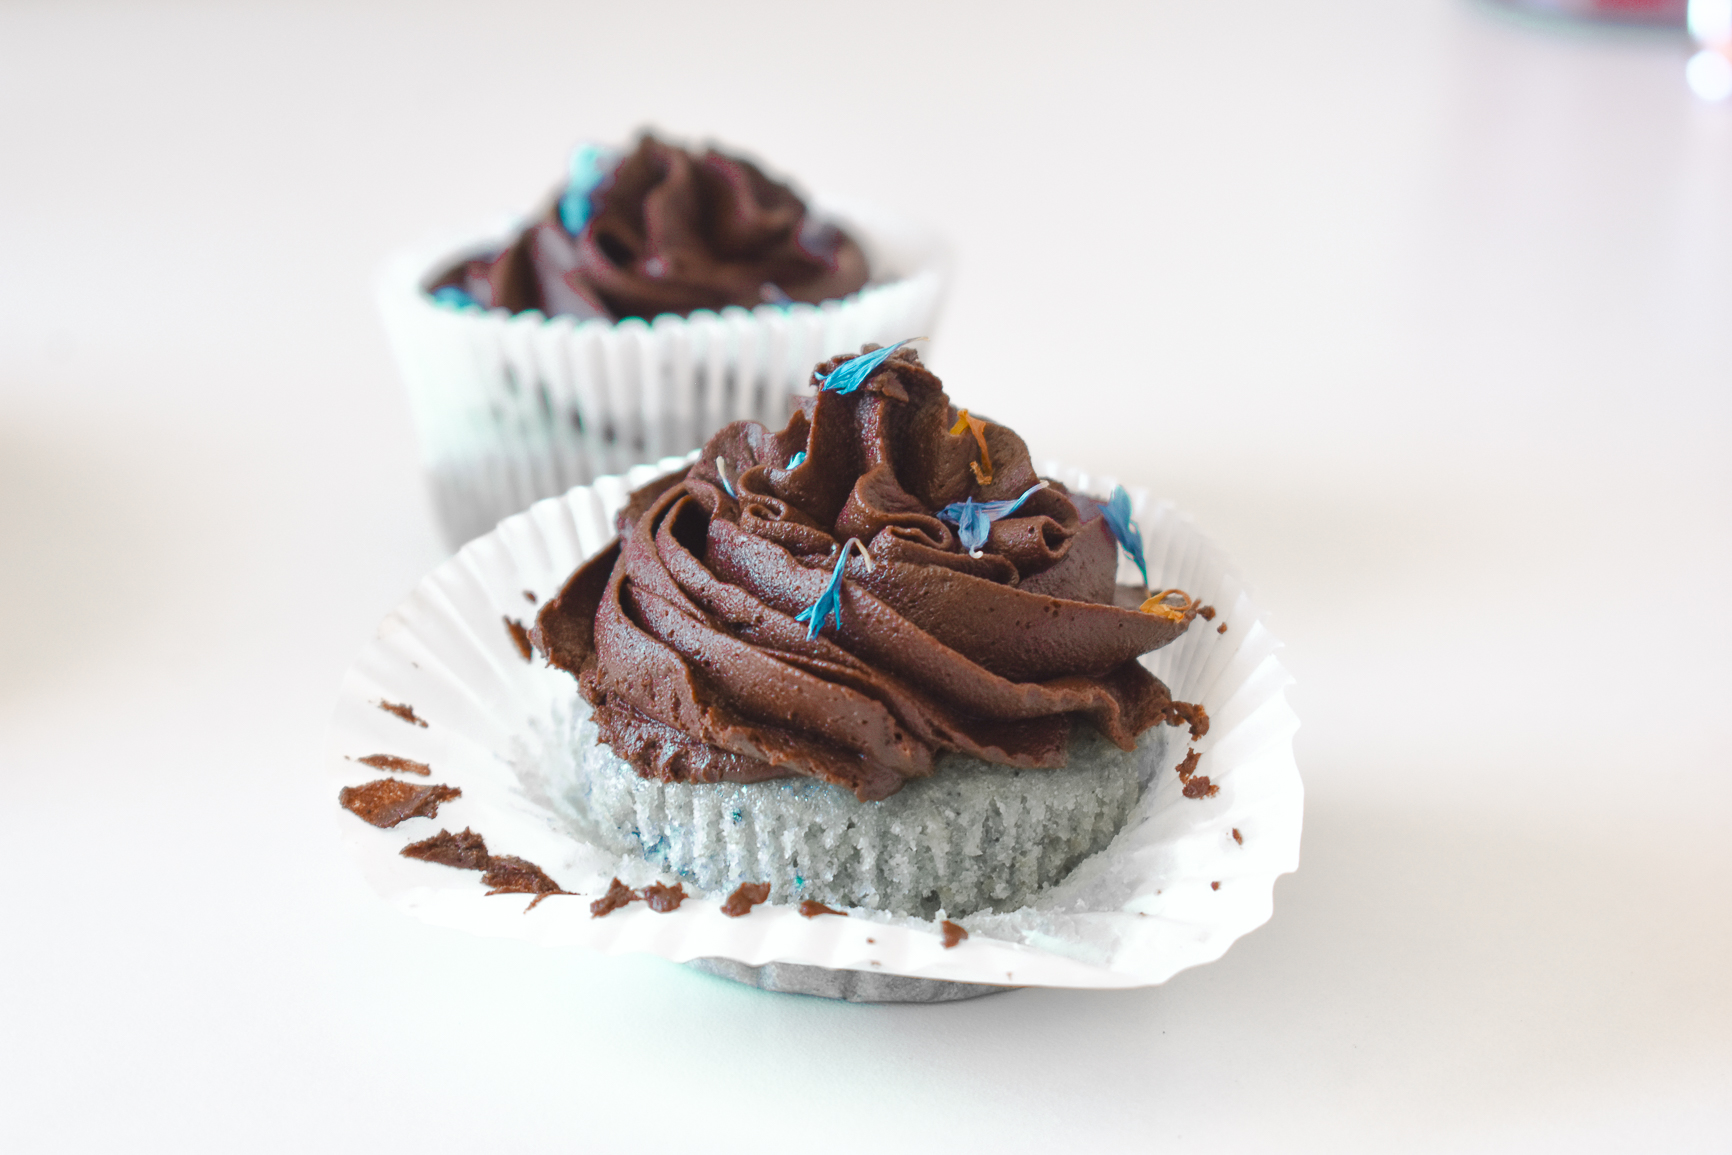 Blue Matcha and Chocolate Cupcakes